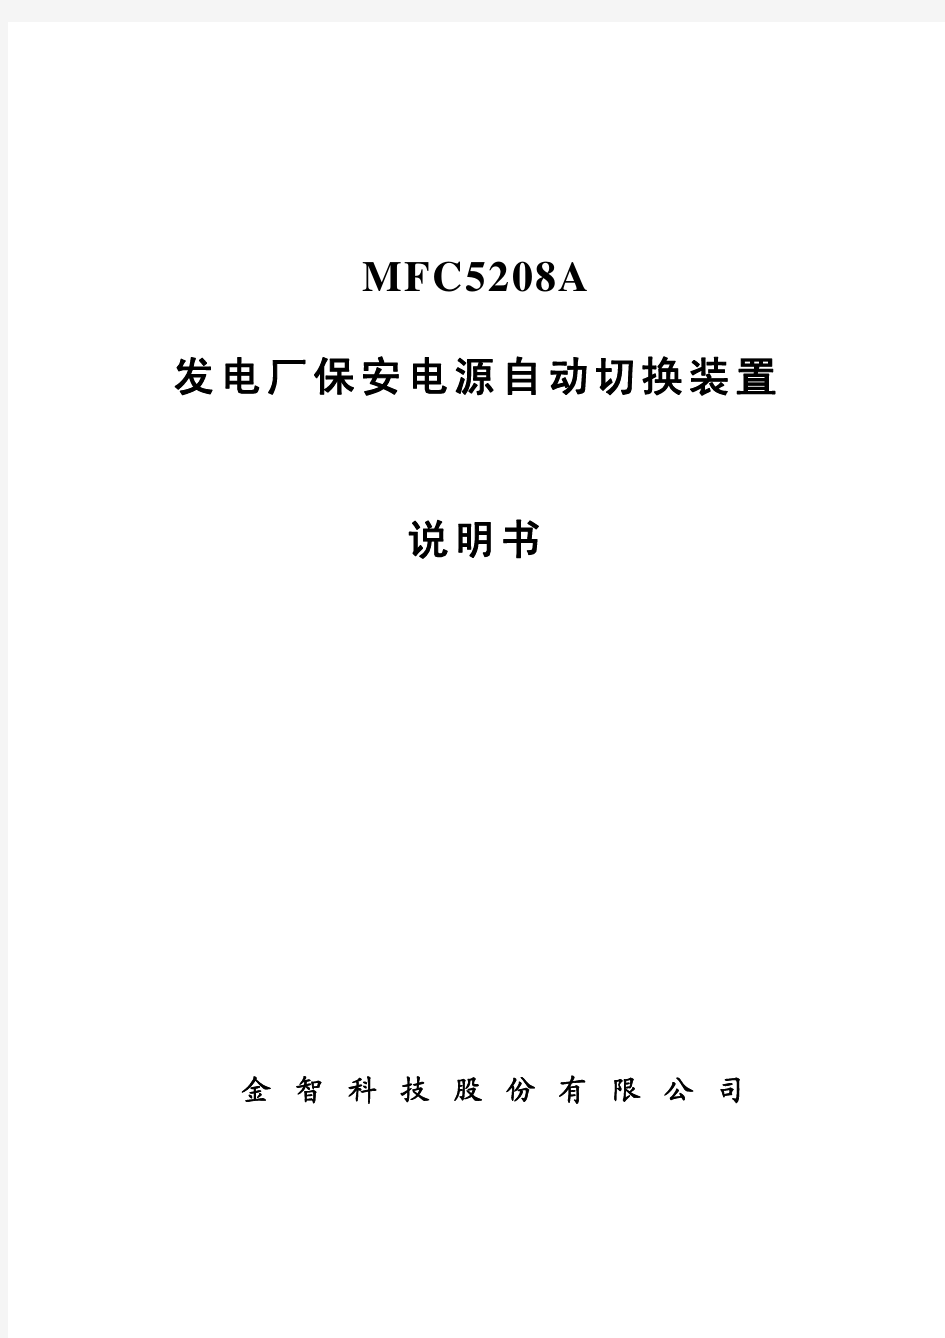 MFC5208A切换装置说明书